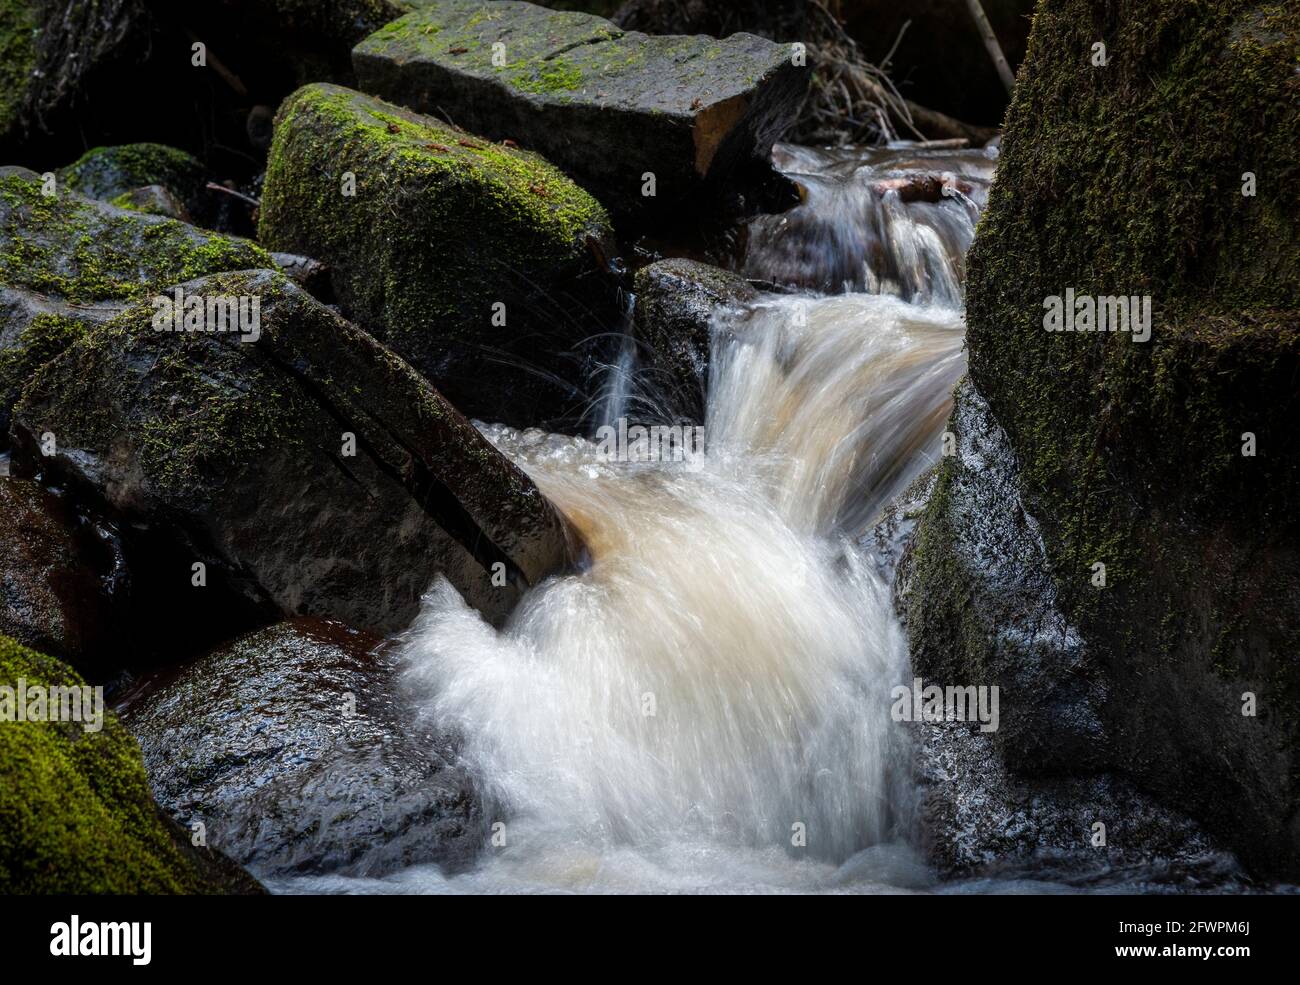 Wyming brook nature reserve, peak district national park, Sheffield, south Yorkshire, England, UK Stock Photo